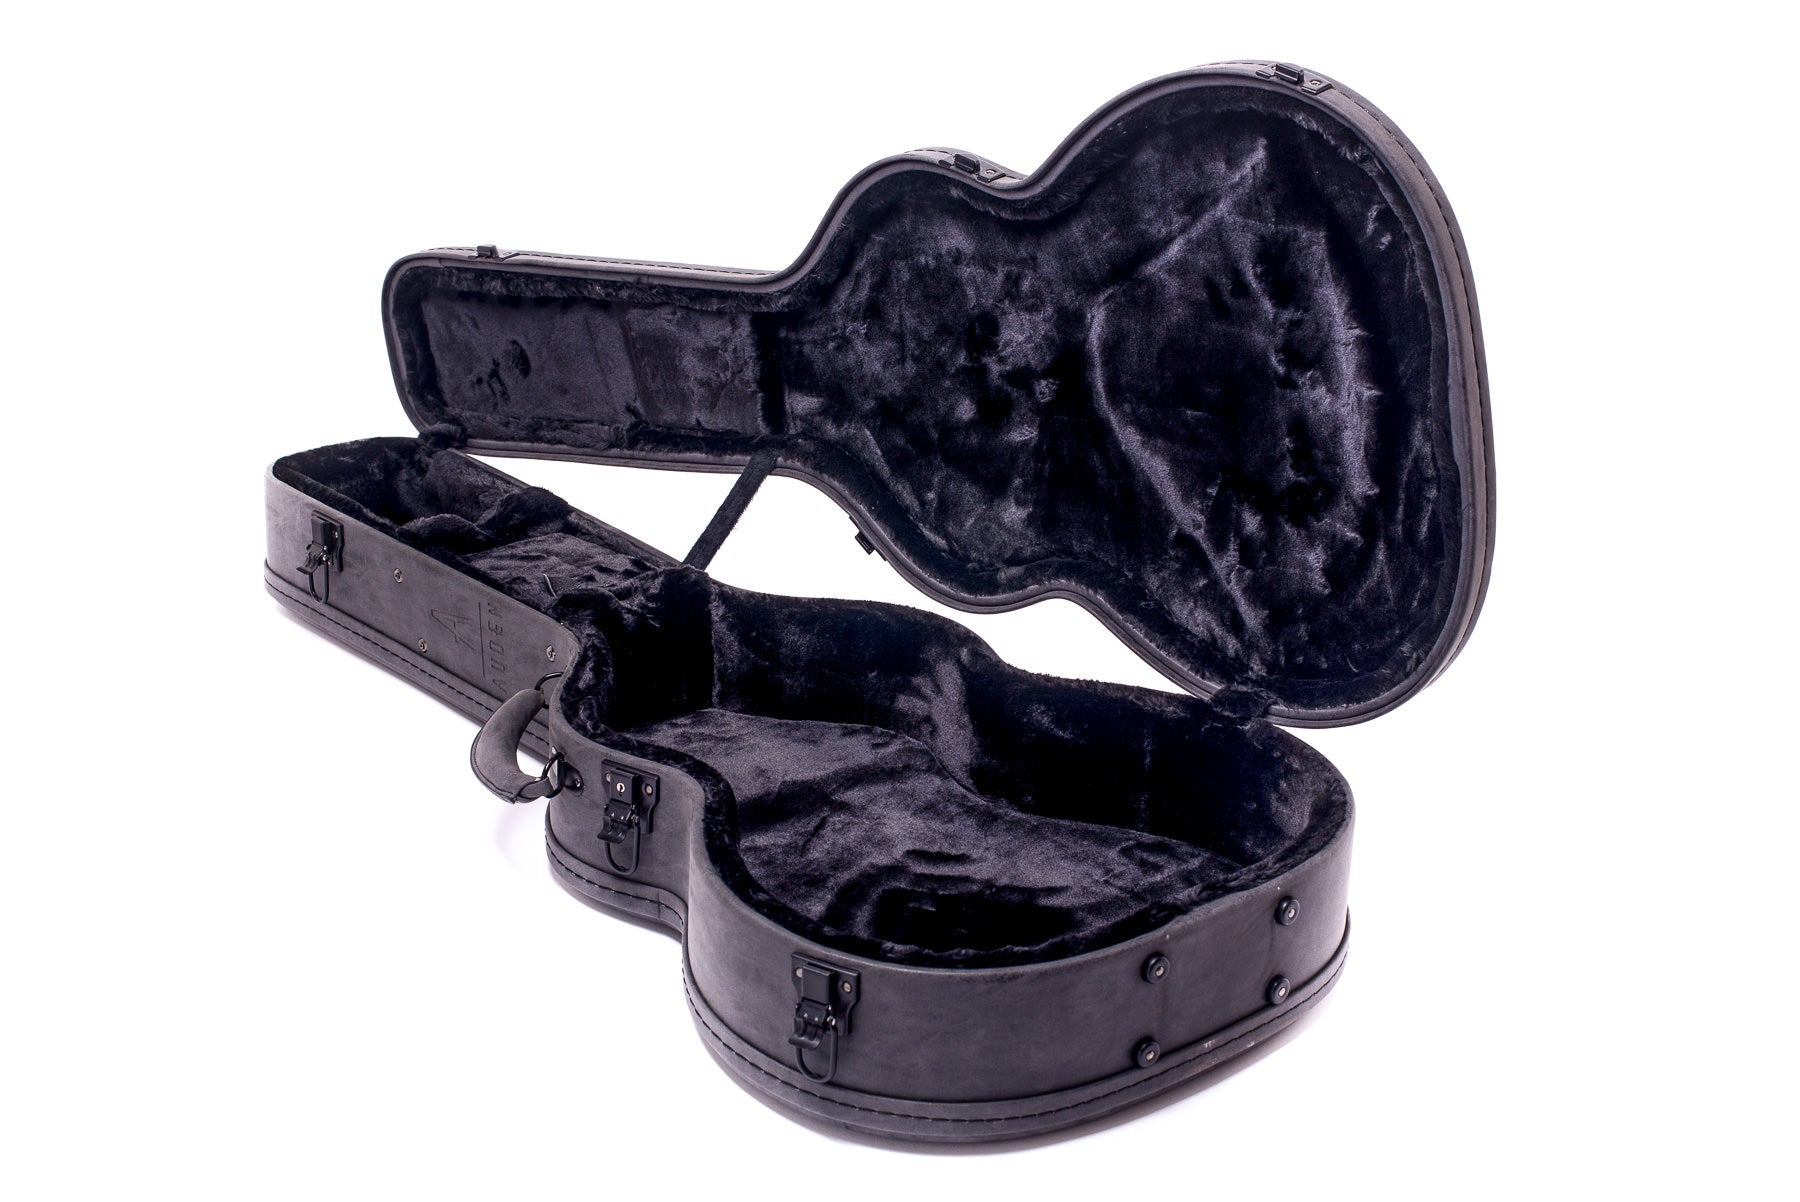 Auden Black Austin Mahogany 12 String., Electro Acoustic Guitar for sale at Richards Guitars.